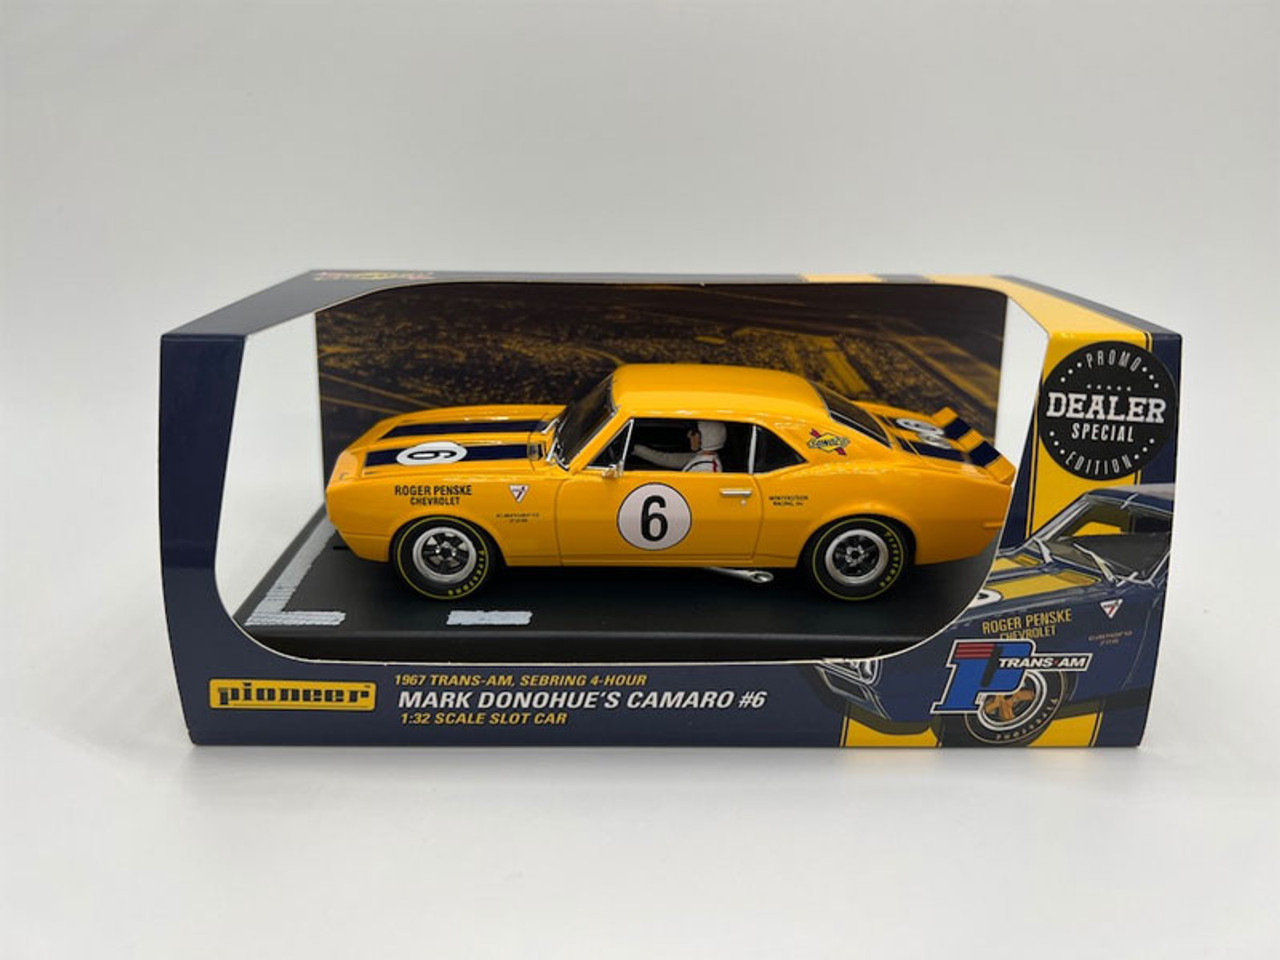 Pioneer 1967 Trans-Am Penske Sunoco (Yellow) Camaro #6 Mark Donohue 1/32  Slot Car - DEALER